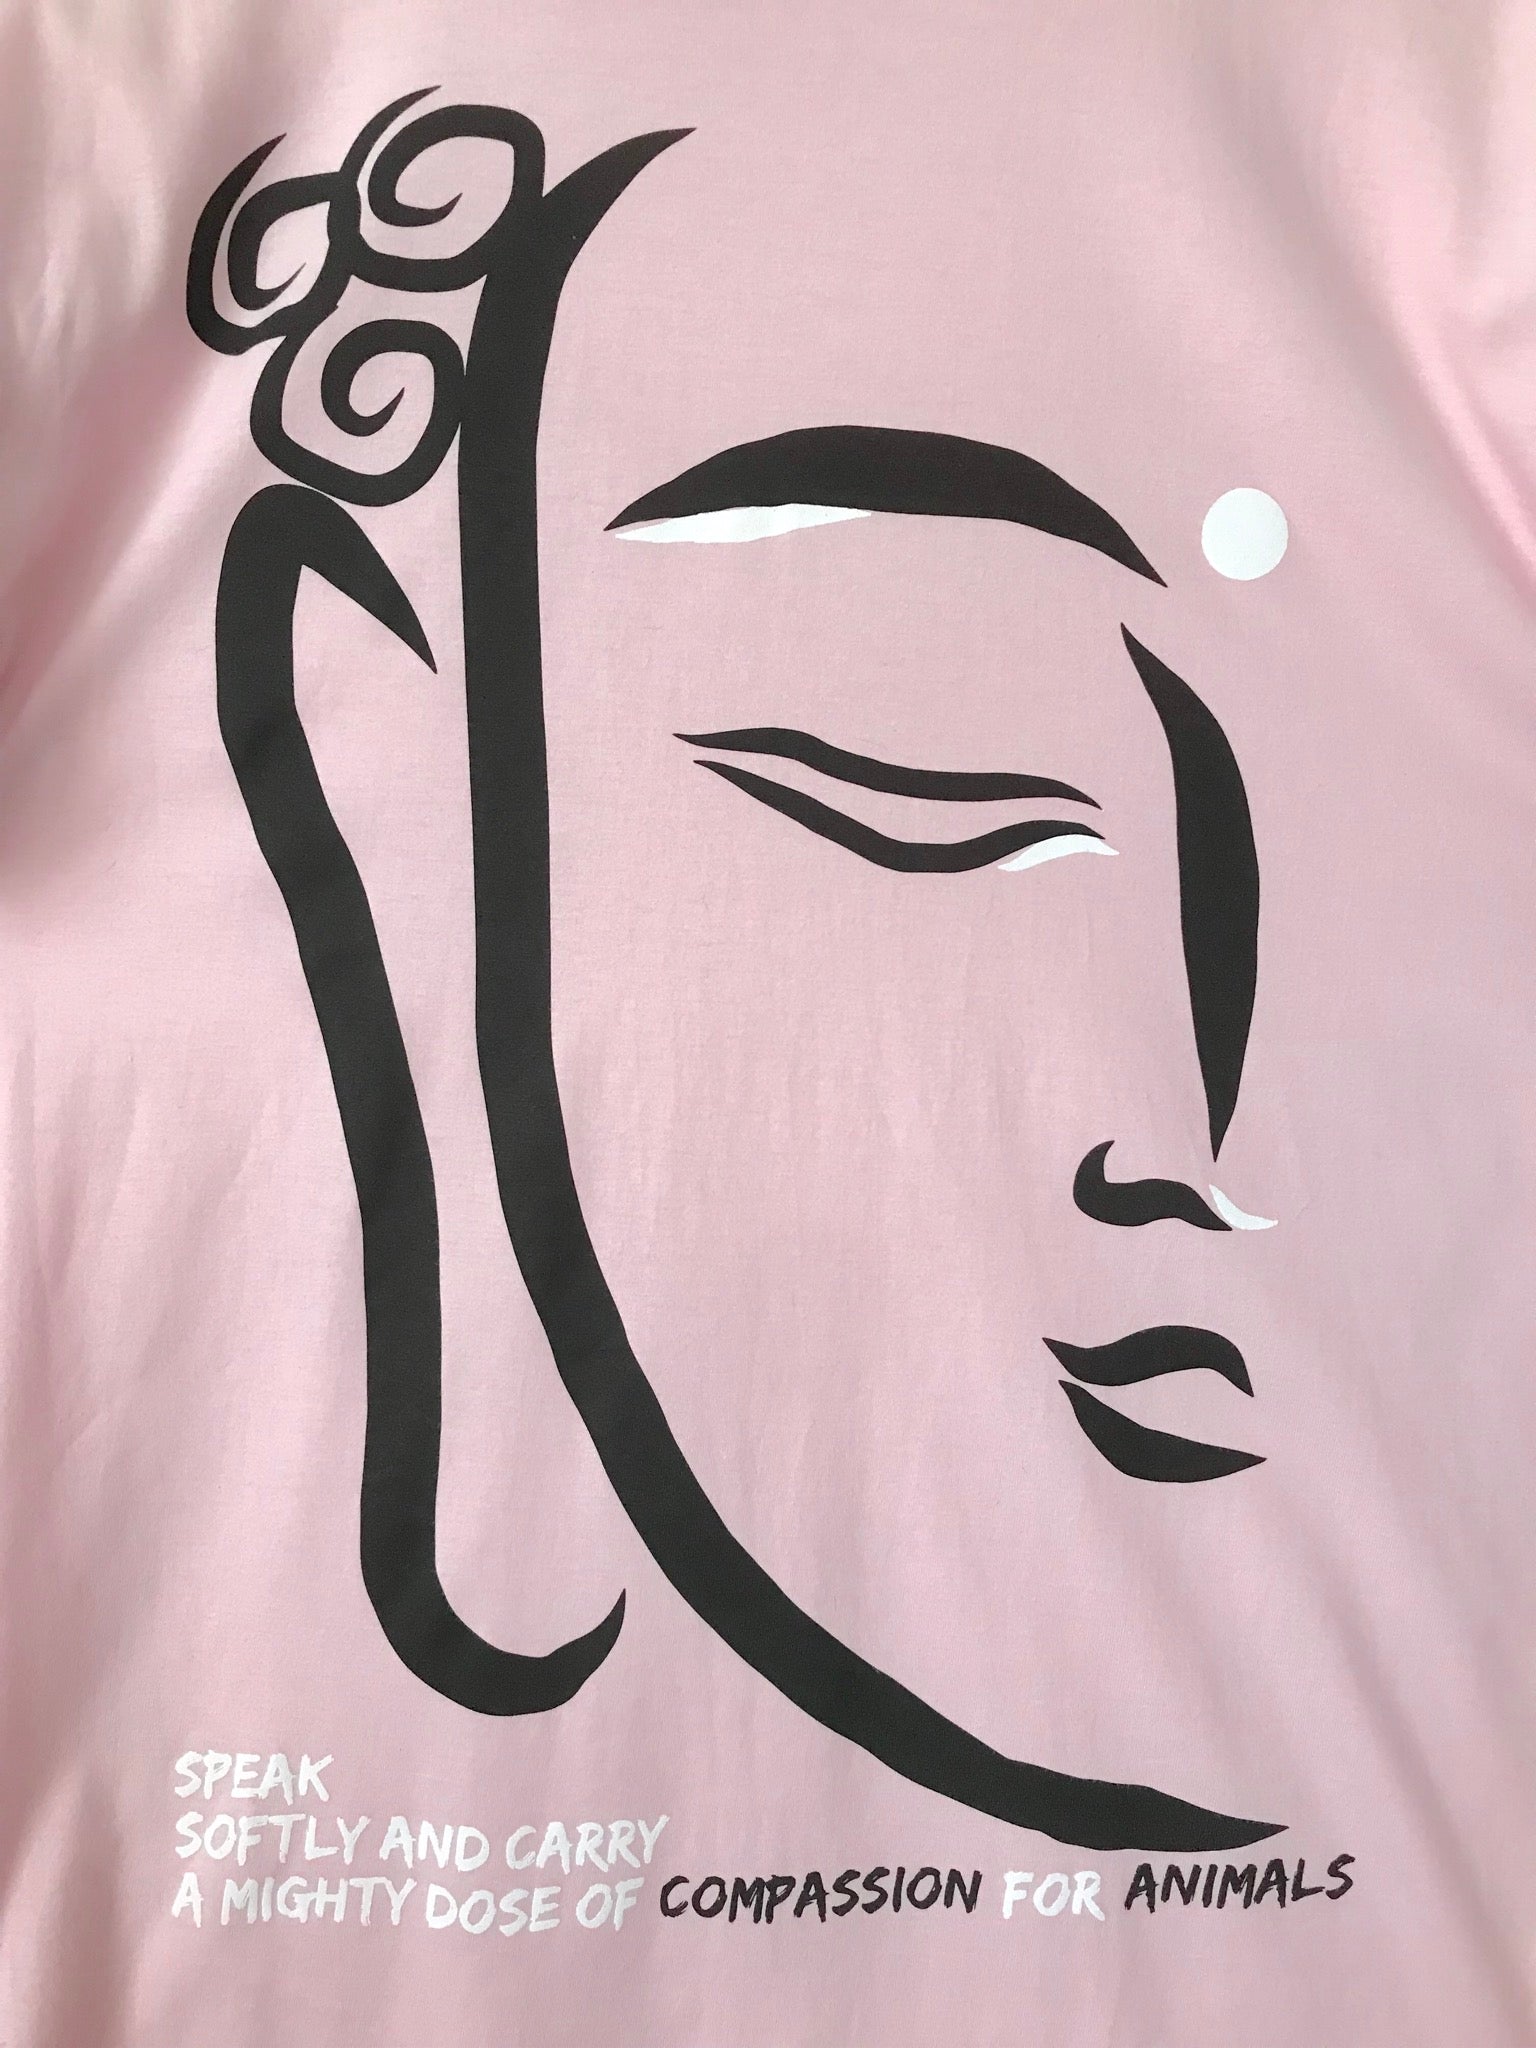 Buddha, love, compassion, vegan, fashion, animal rights, T-shirts, pink